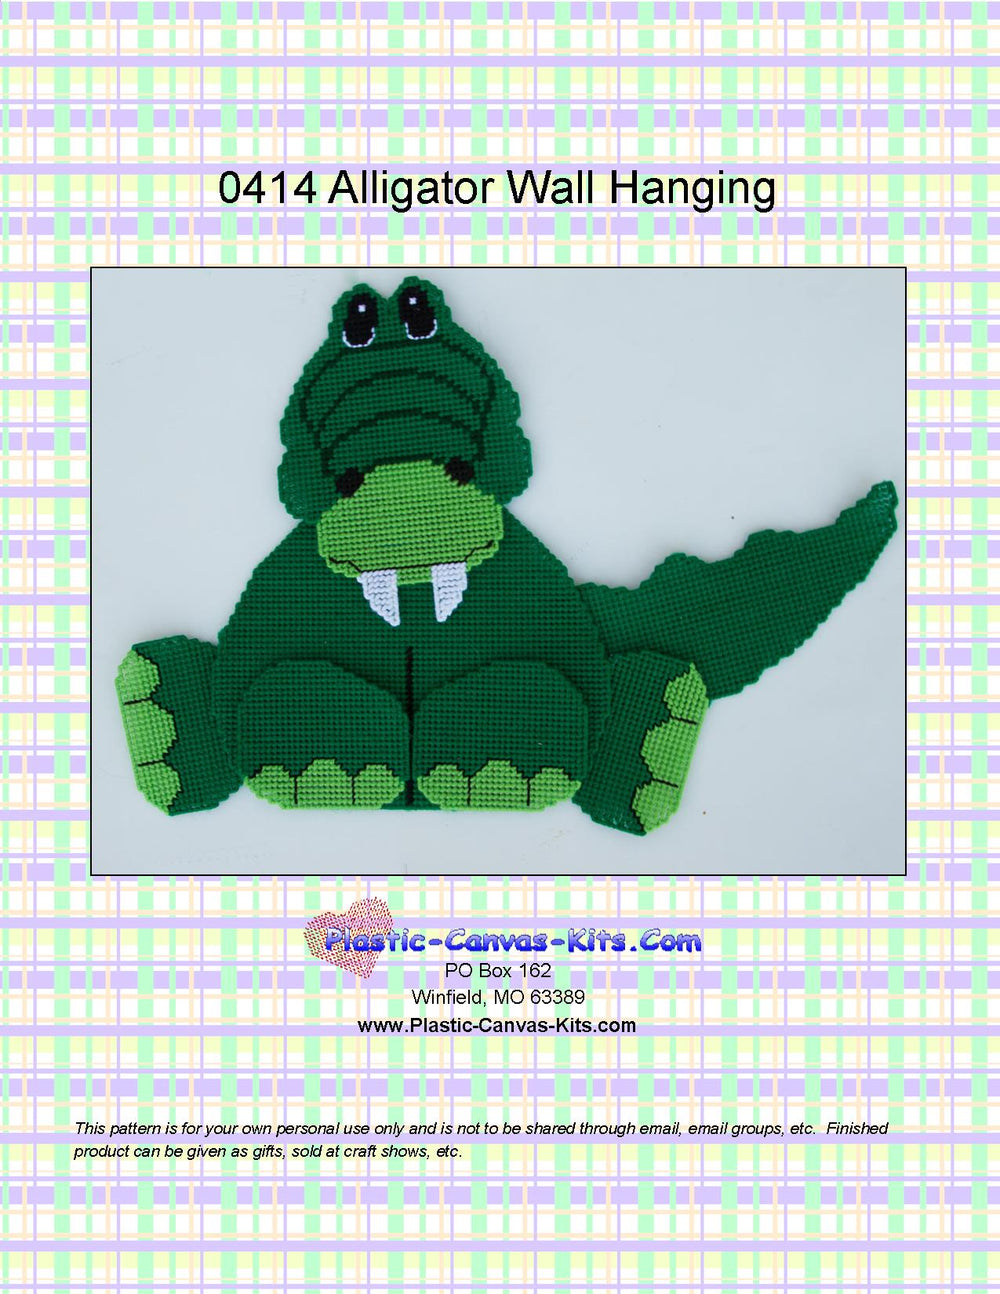 Alligator Wall Hanging